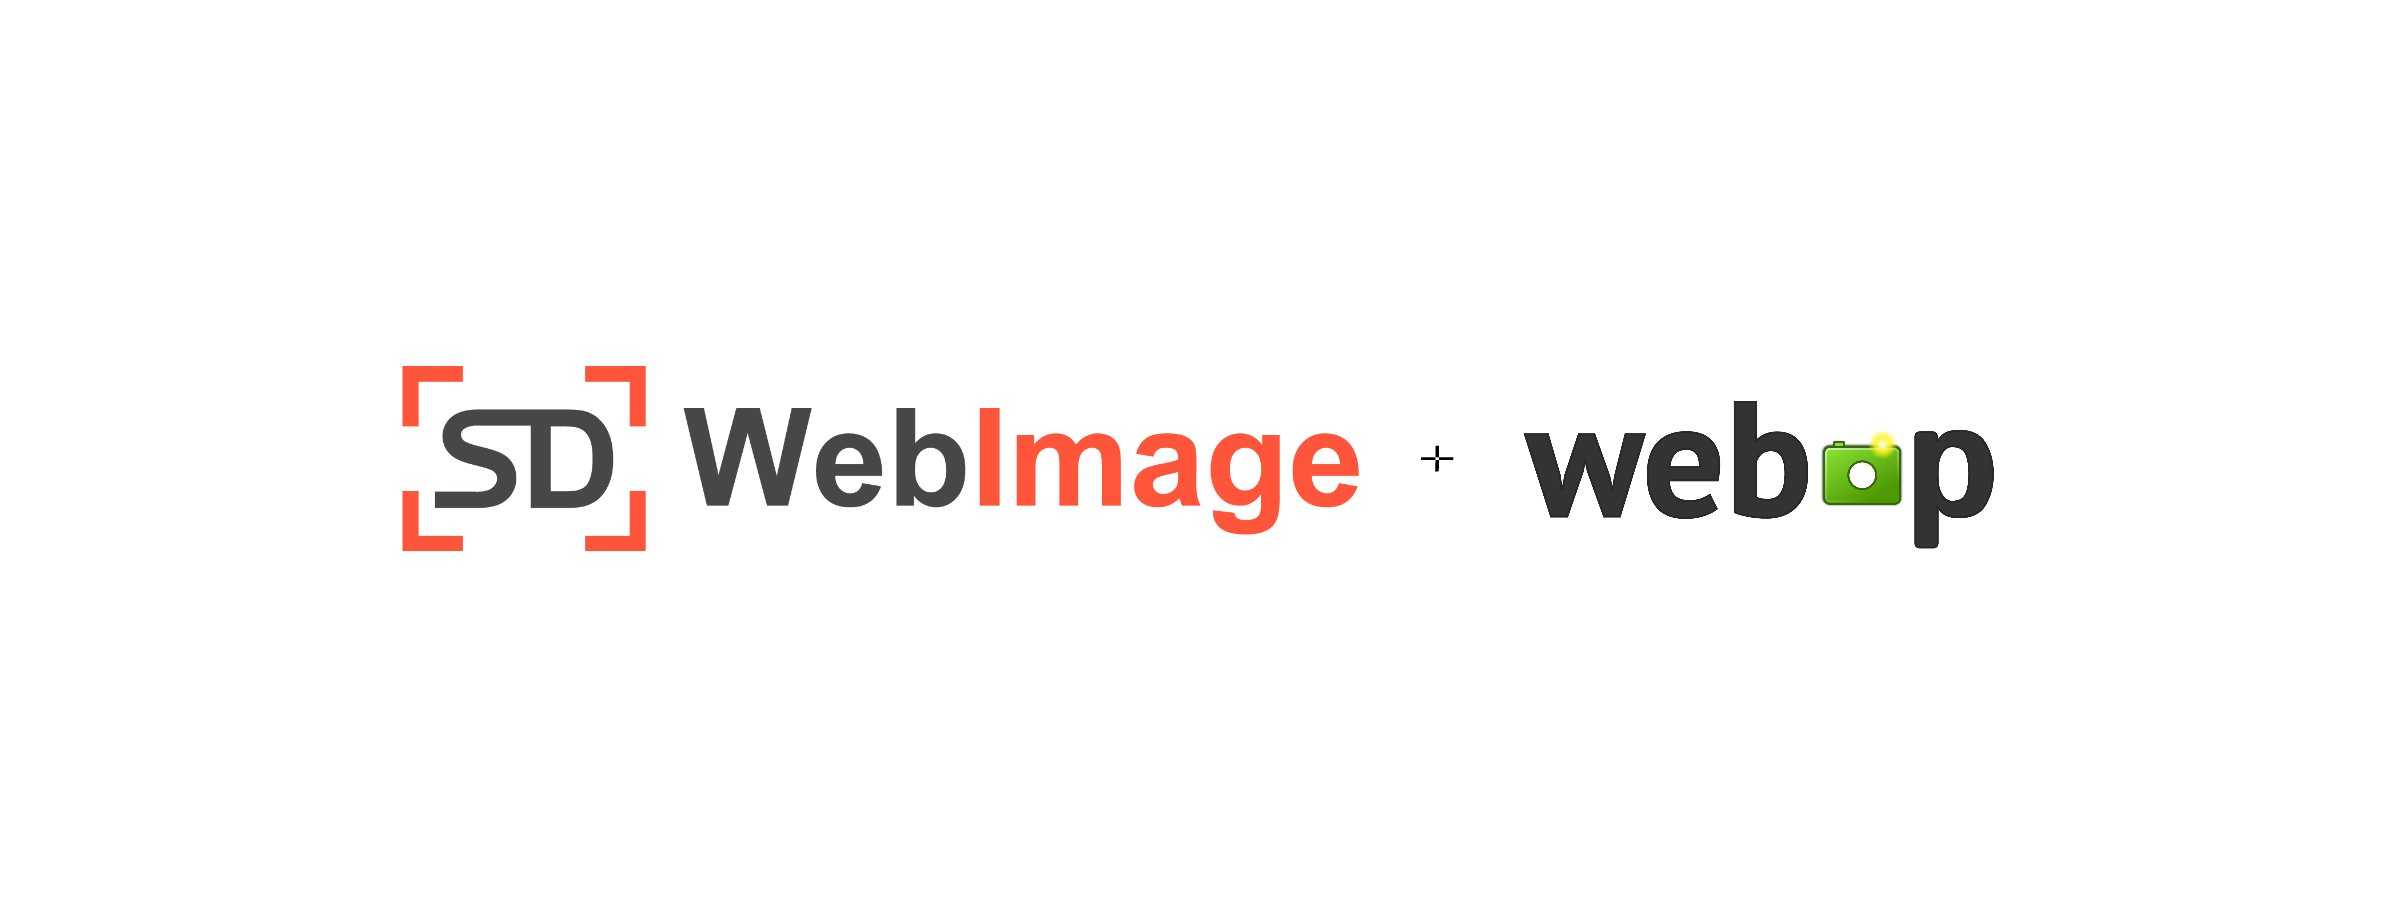 SDWebImage 为什么无法读取 webpmux 生成的 WebP 动图？